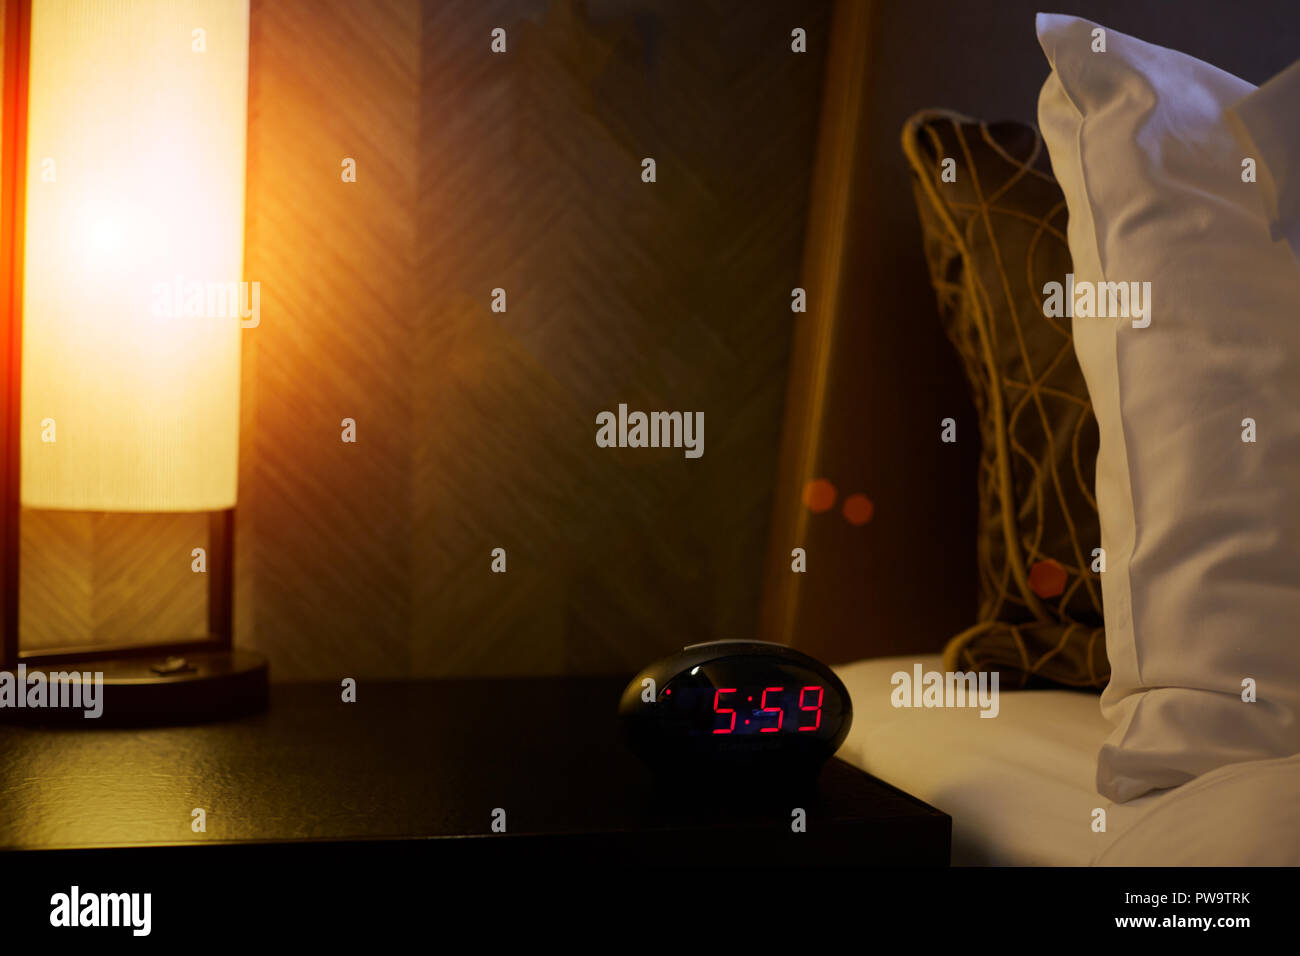 Alarm clock near the bed in bedroom Stock Photo